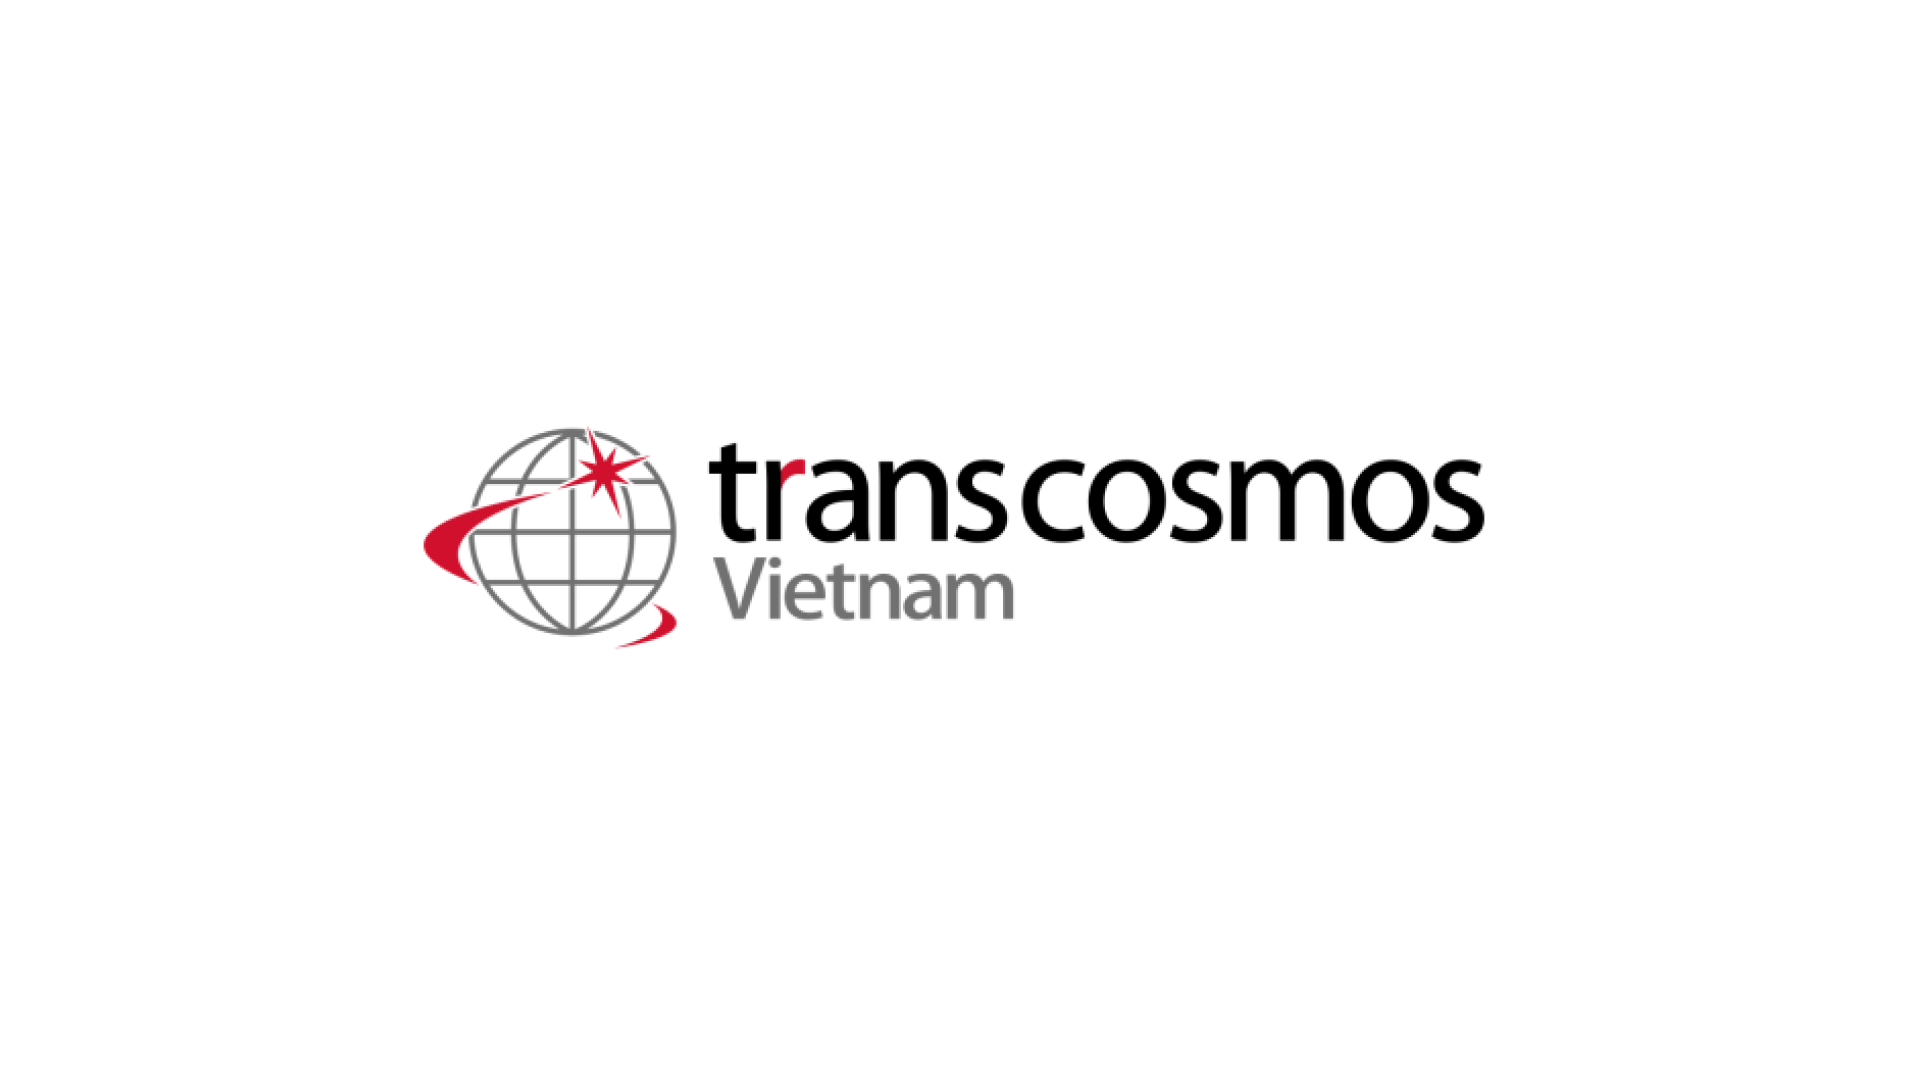 transcosmos Việt Nam logo